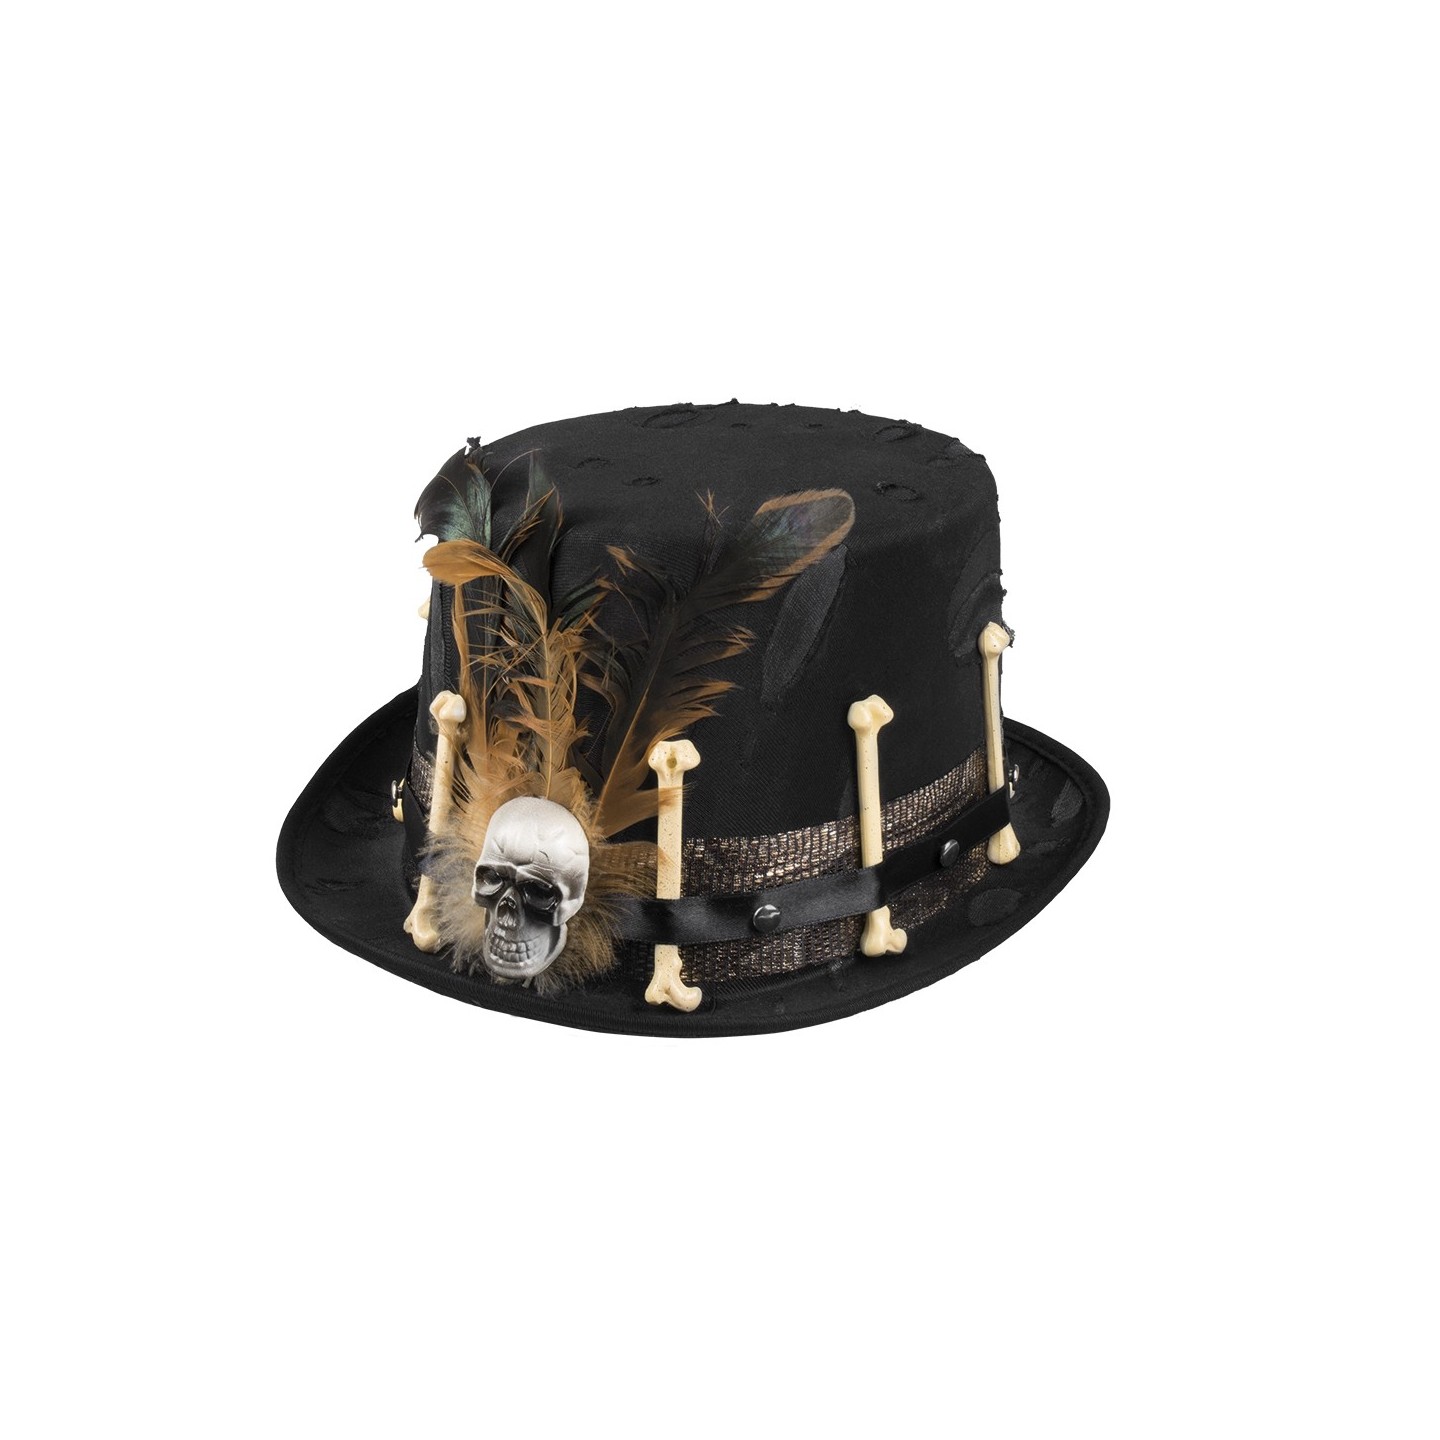 Voodoo hoed Nawu halloween feestartikelen